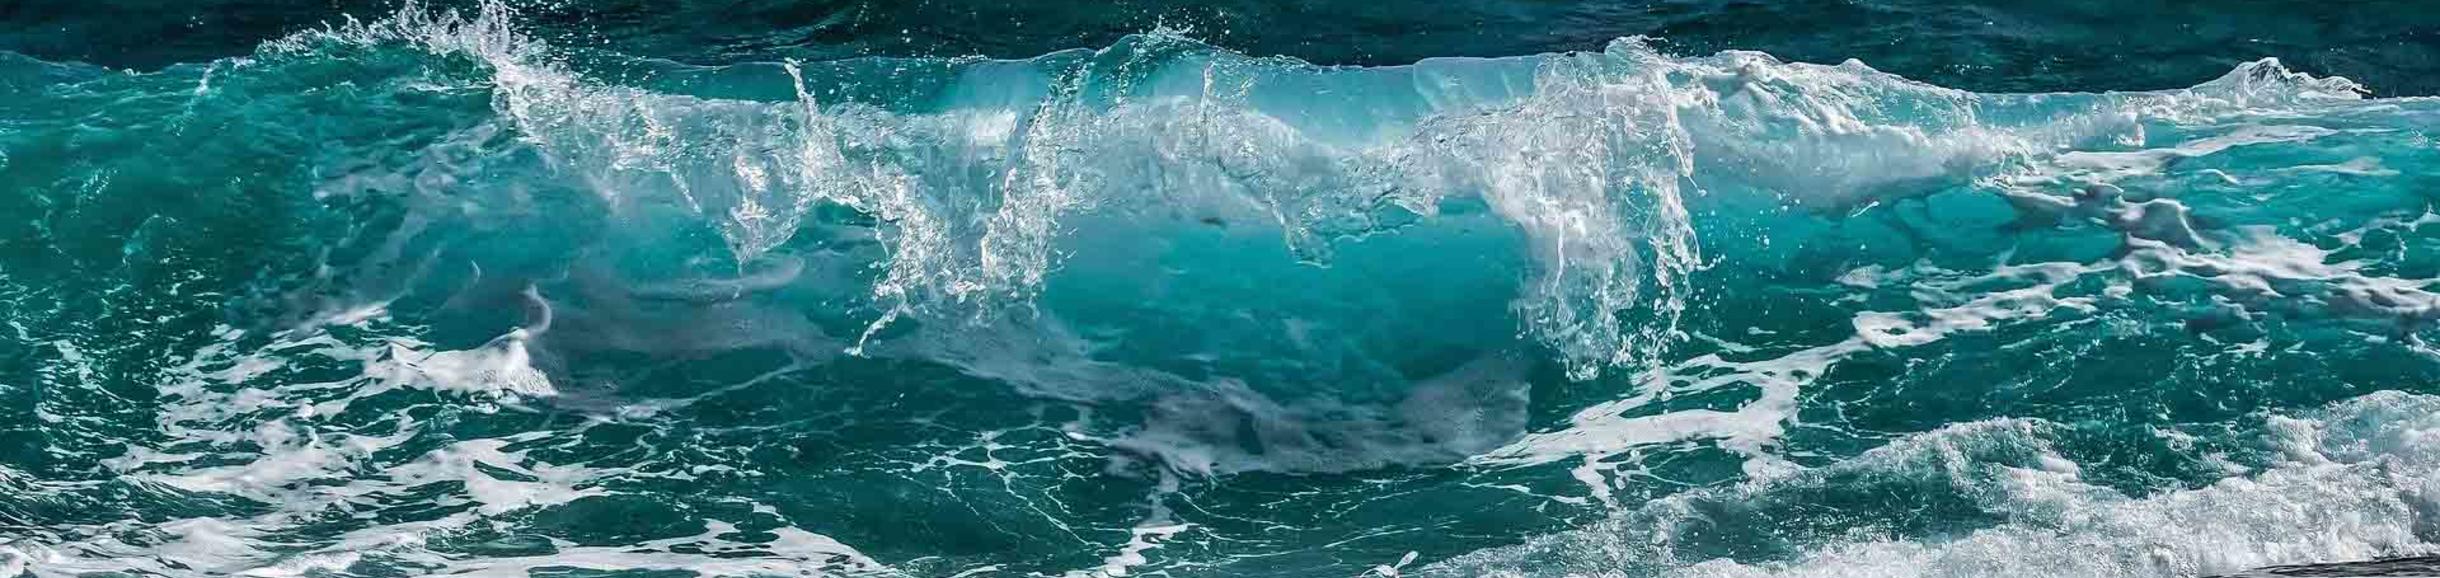 Ocean wave / pixabay.com